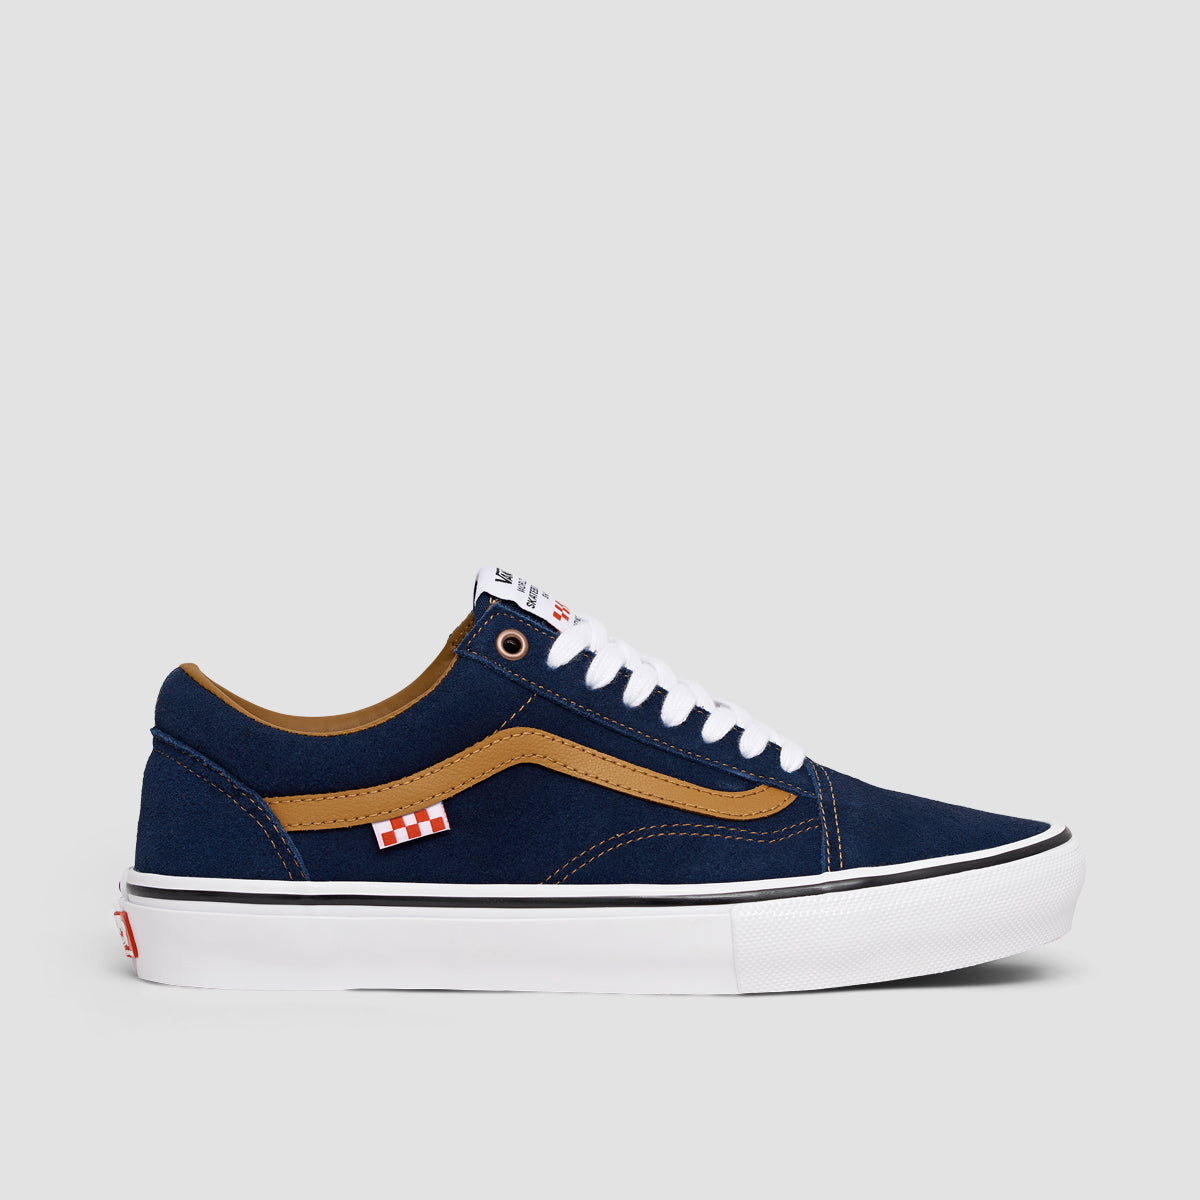 Vans Skate Old Skool Shoes - Reynolds Navy/Golden Brown